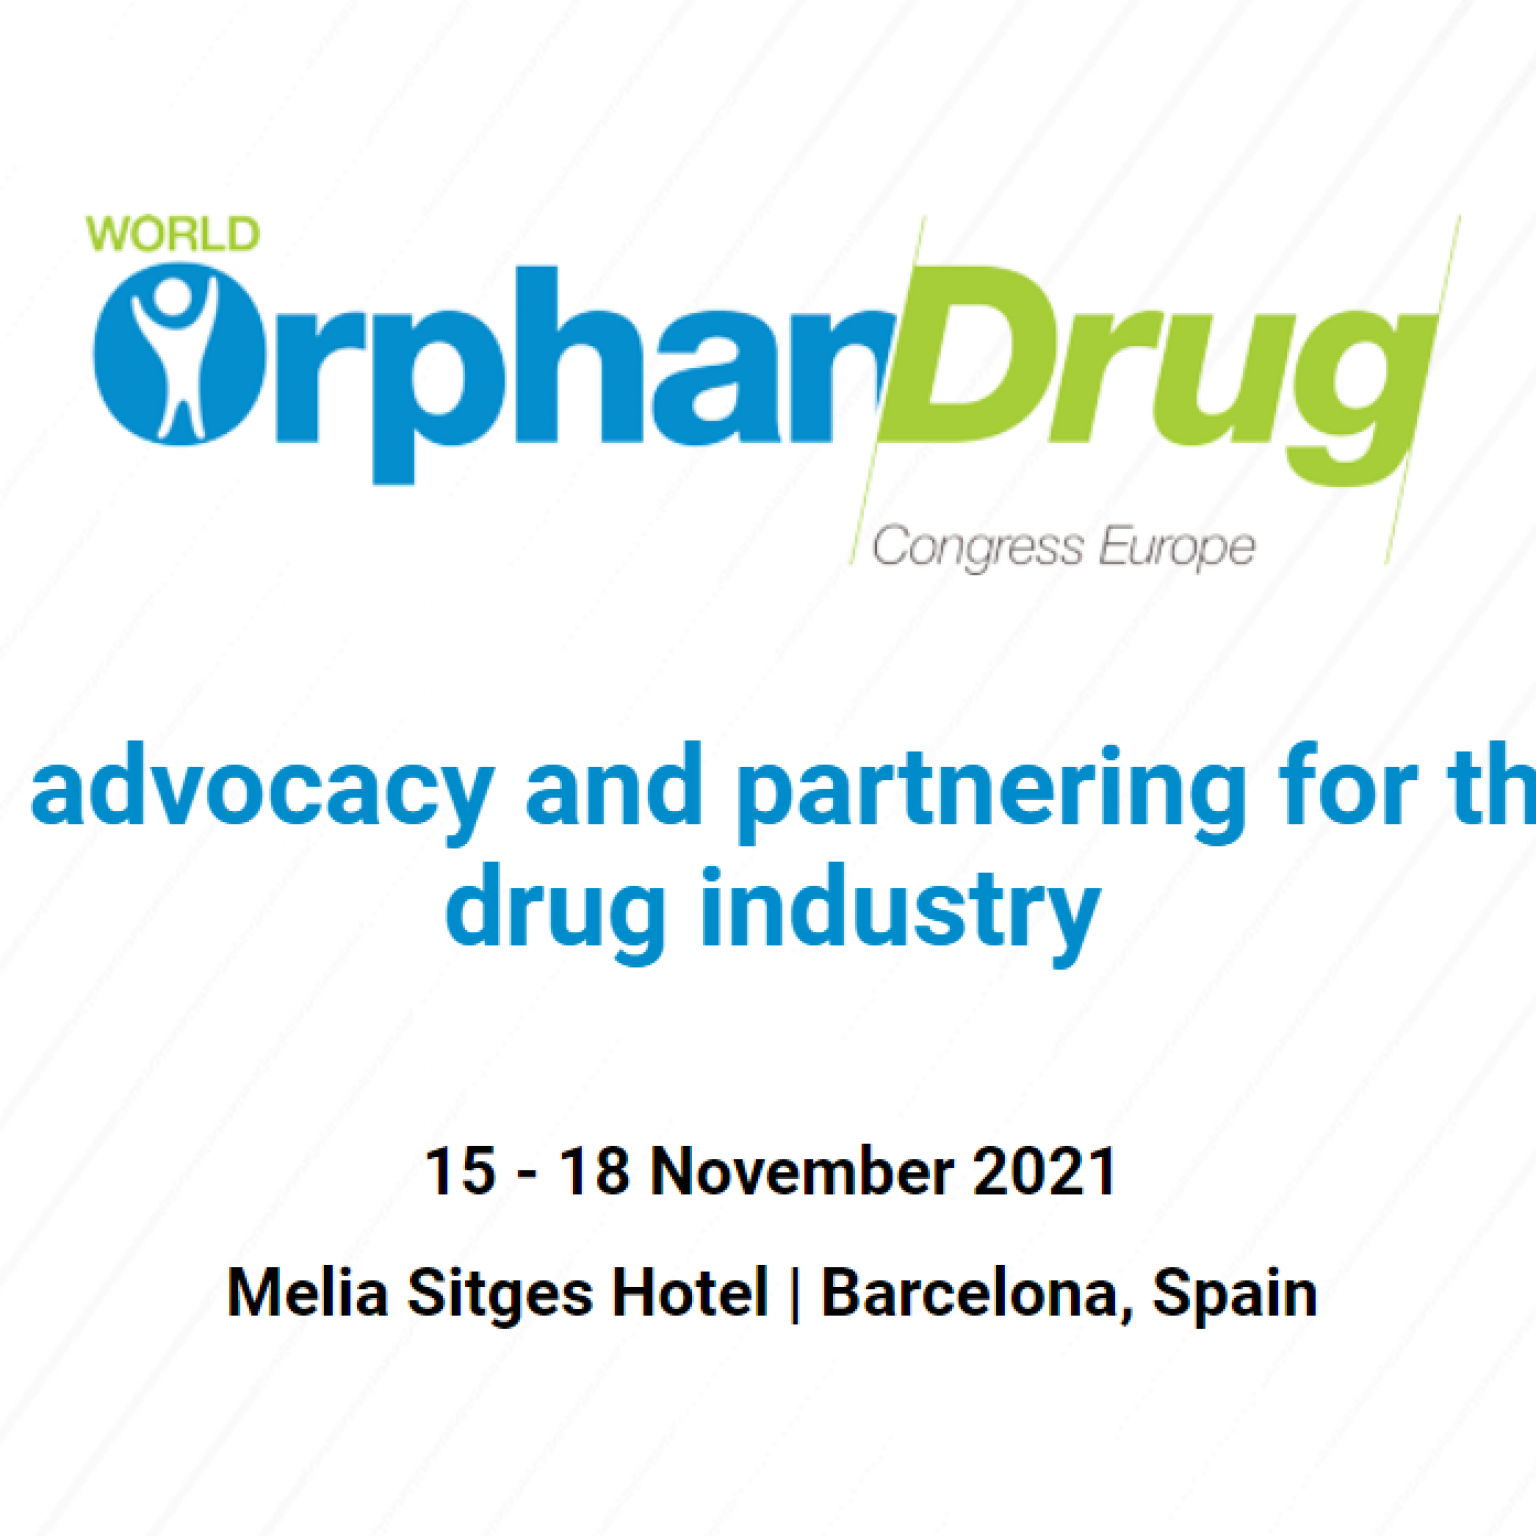 World Orphan Drug Congress Europe